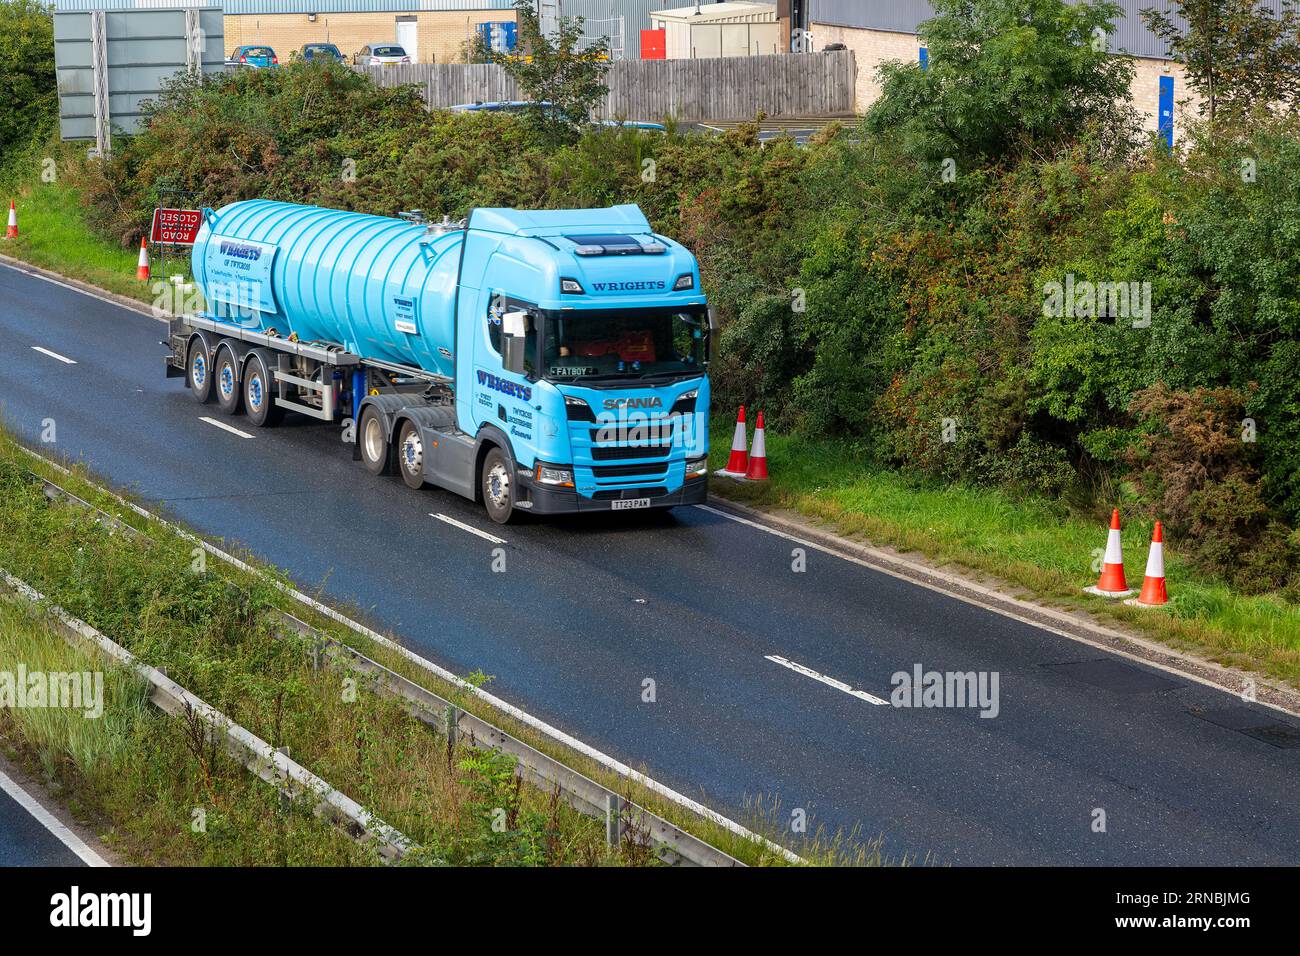 Wrights bulk carrier Scania lorry, A12 dual carriageway main road, Martlesham, Suffolk, England, UK Stock Photo